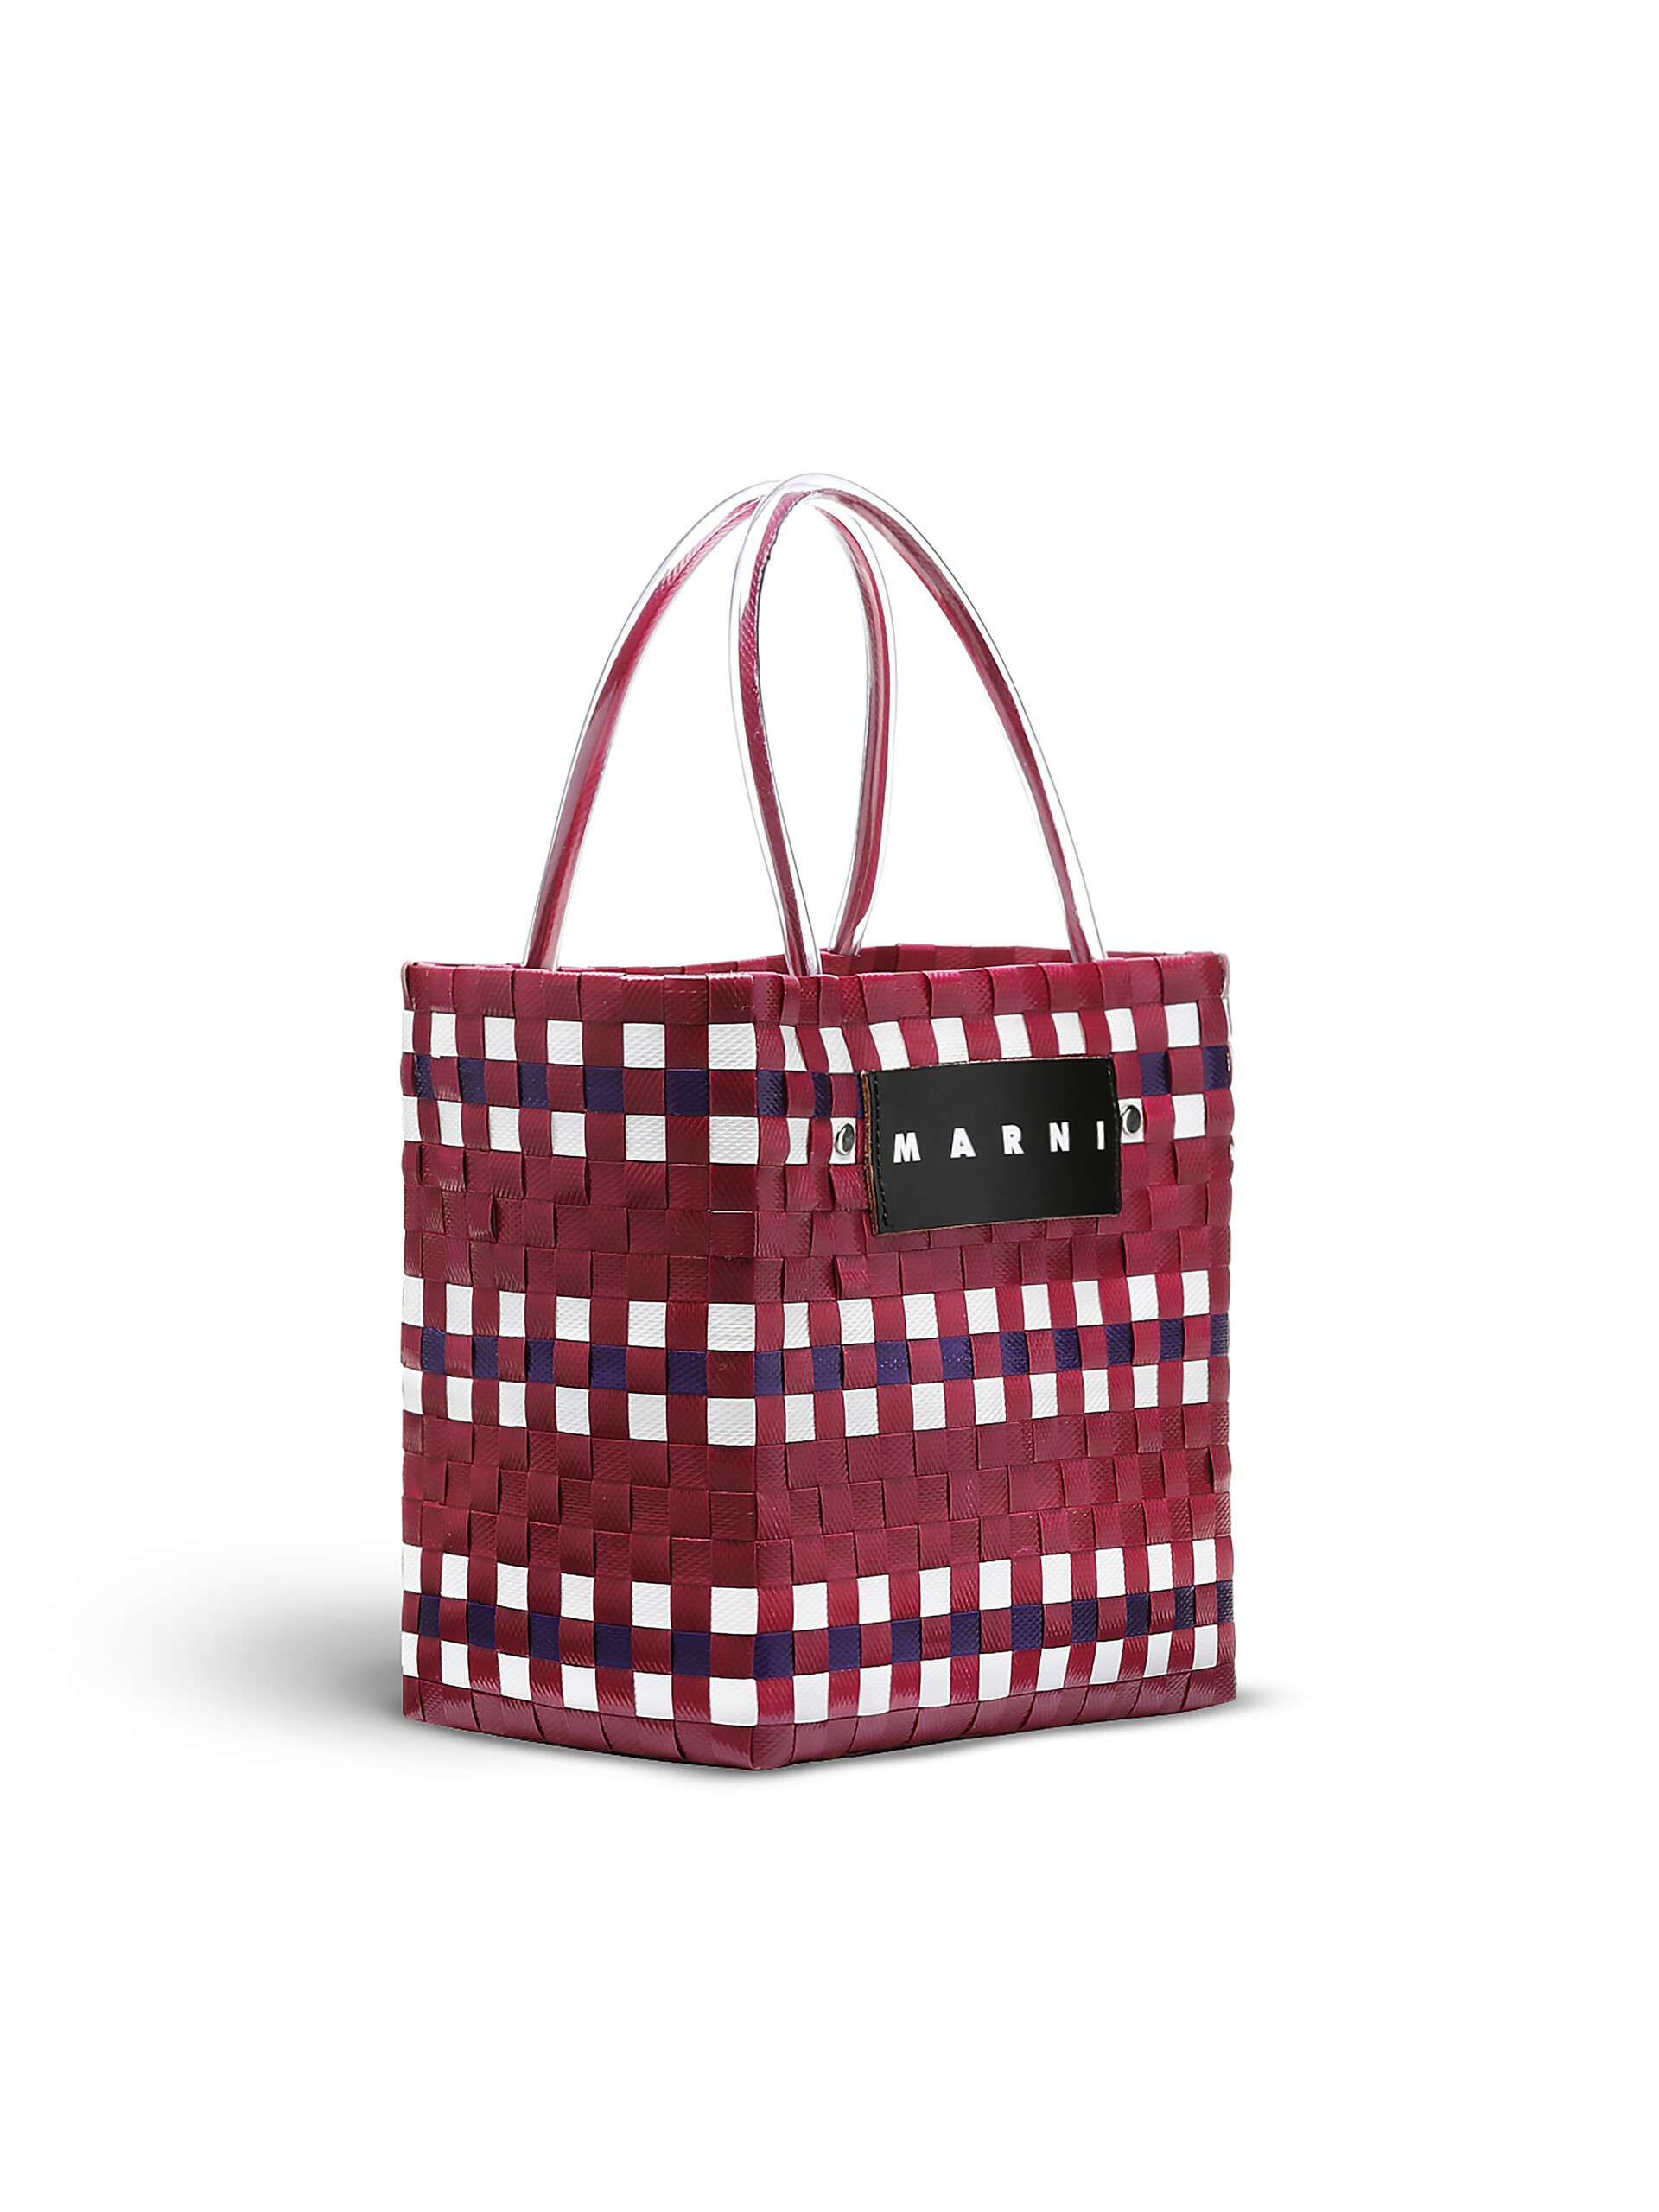 MARNI MARKET BASKET bag in pink woven material - Bags - Image 2